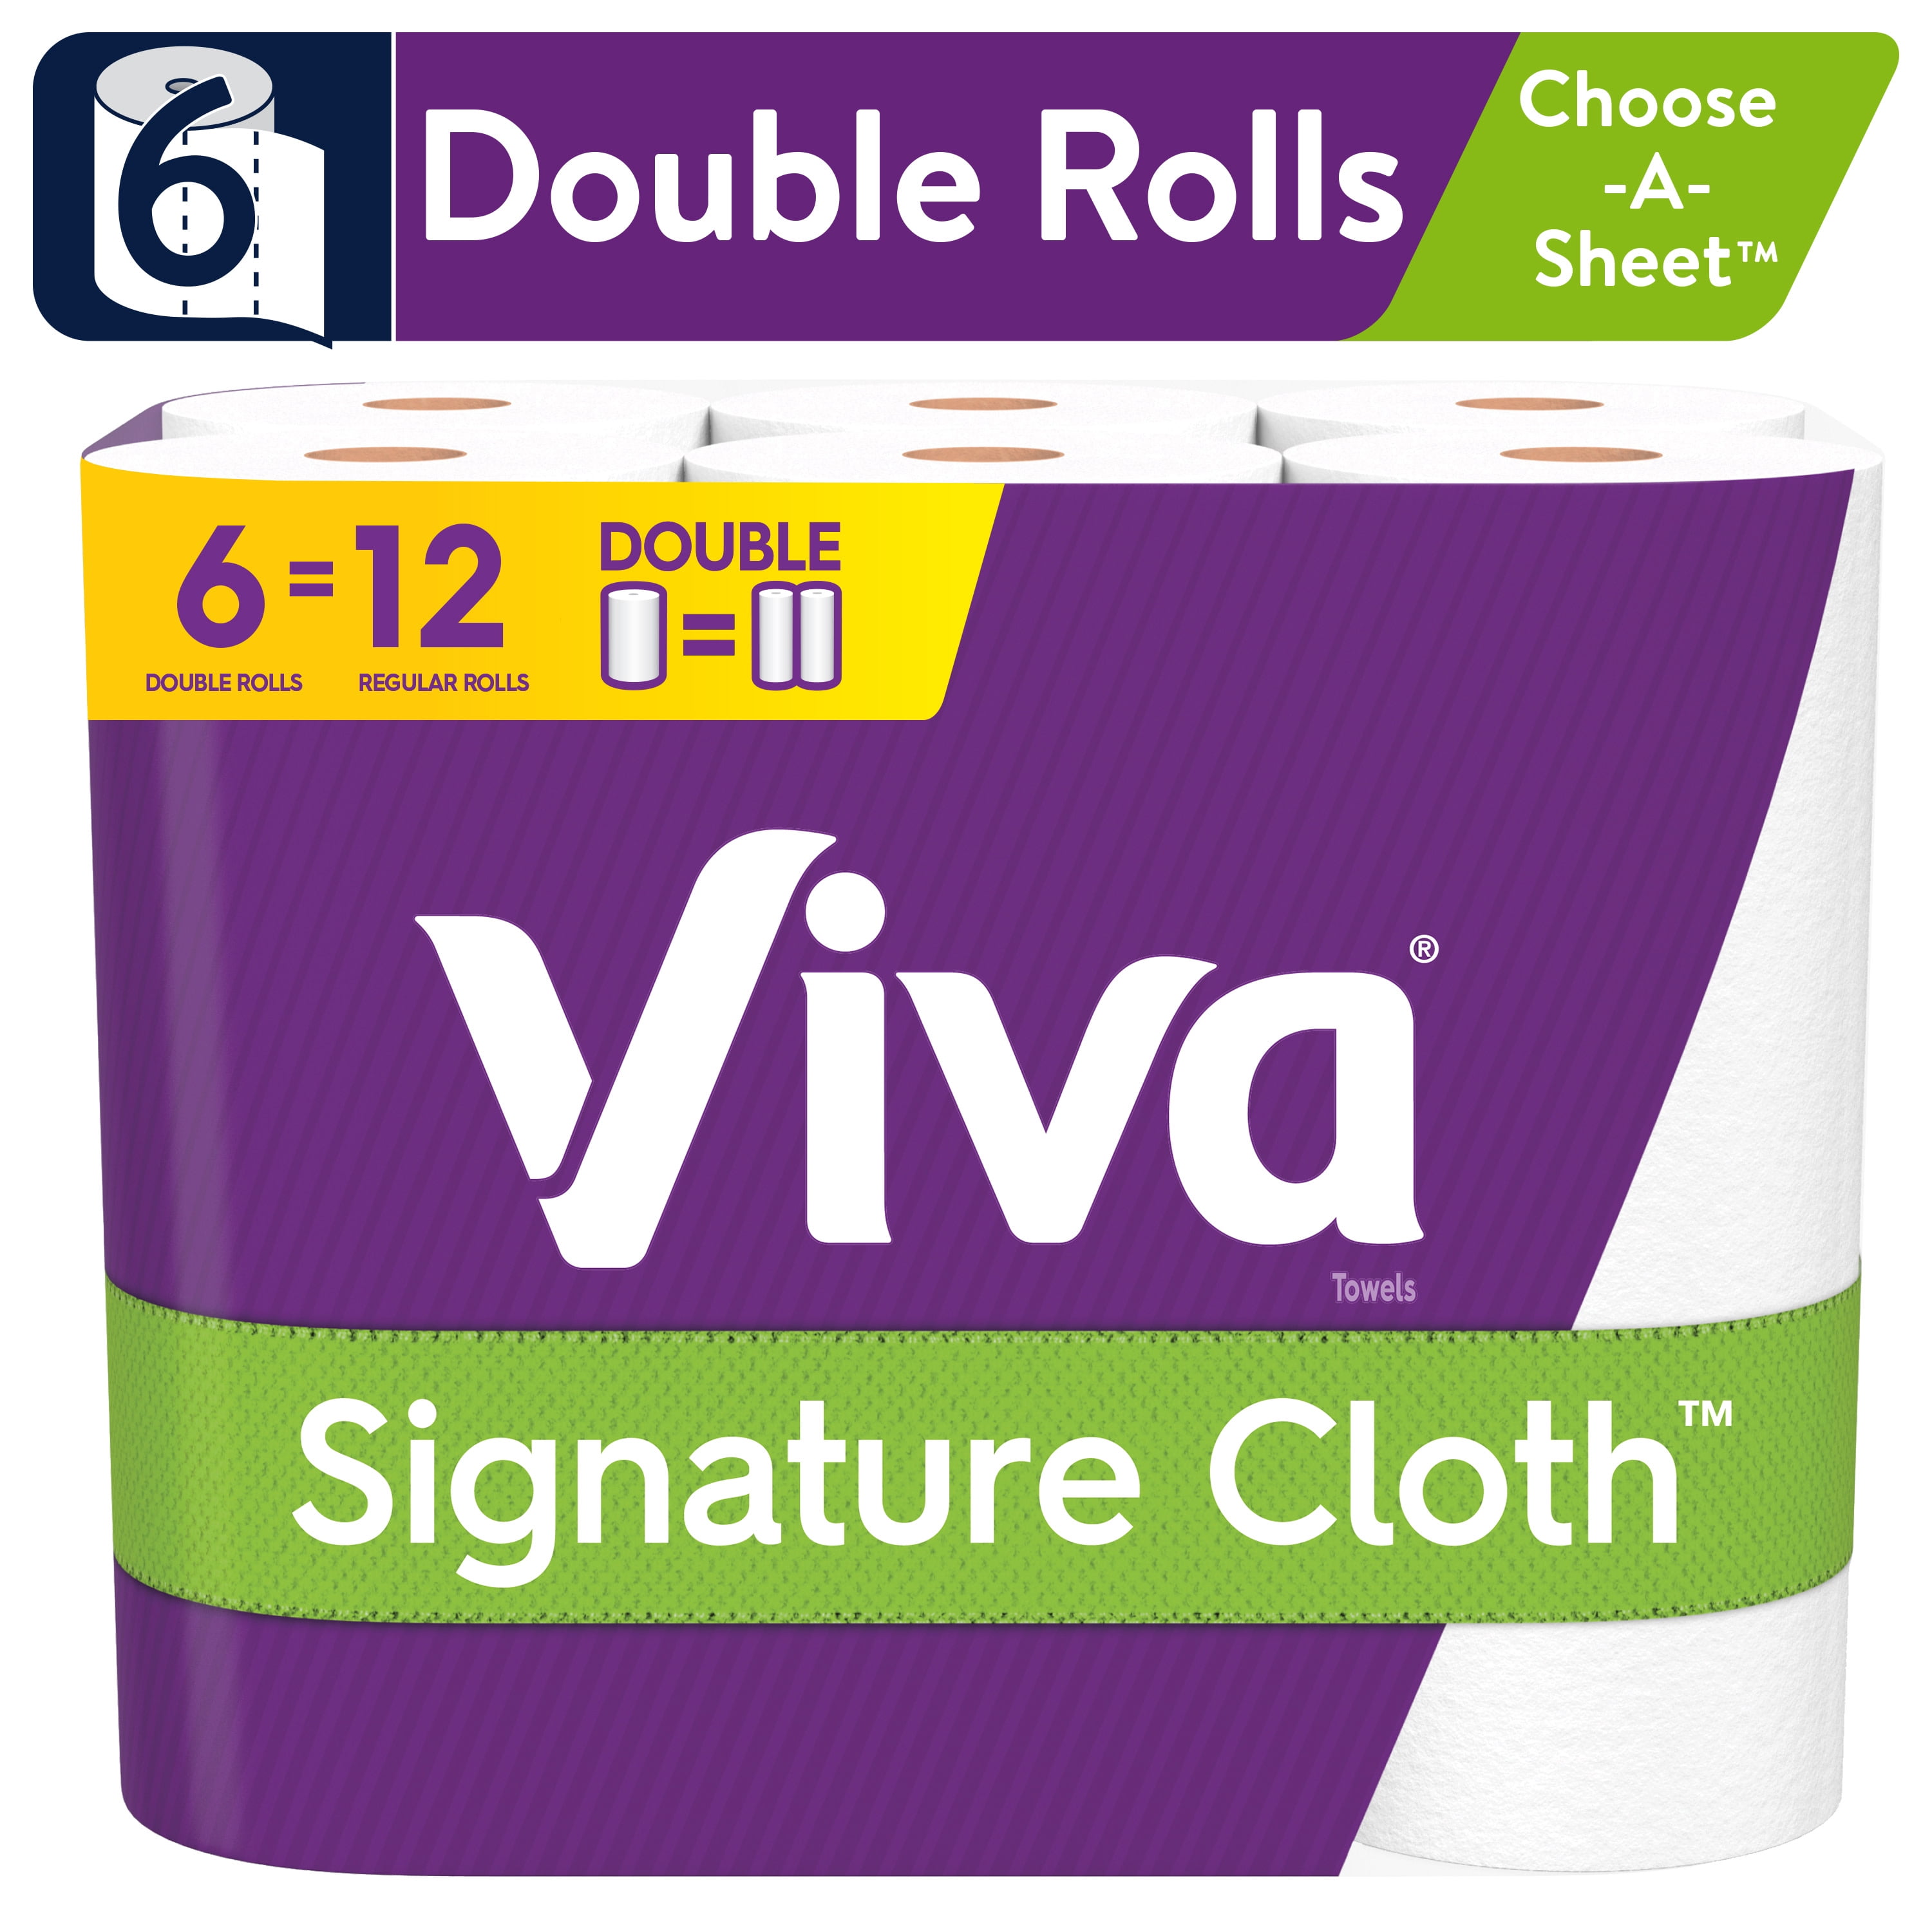 Details about   4-pack-Viva Signature Cloth Paper Towels,Choose-A-Sheet,6 Double Rolls12 Regular 